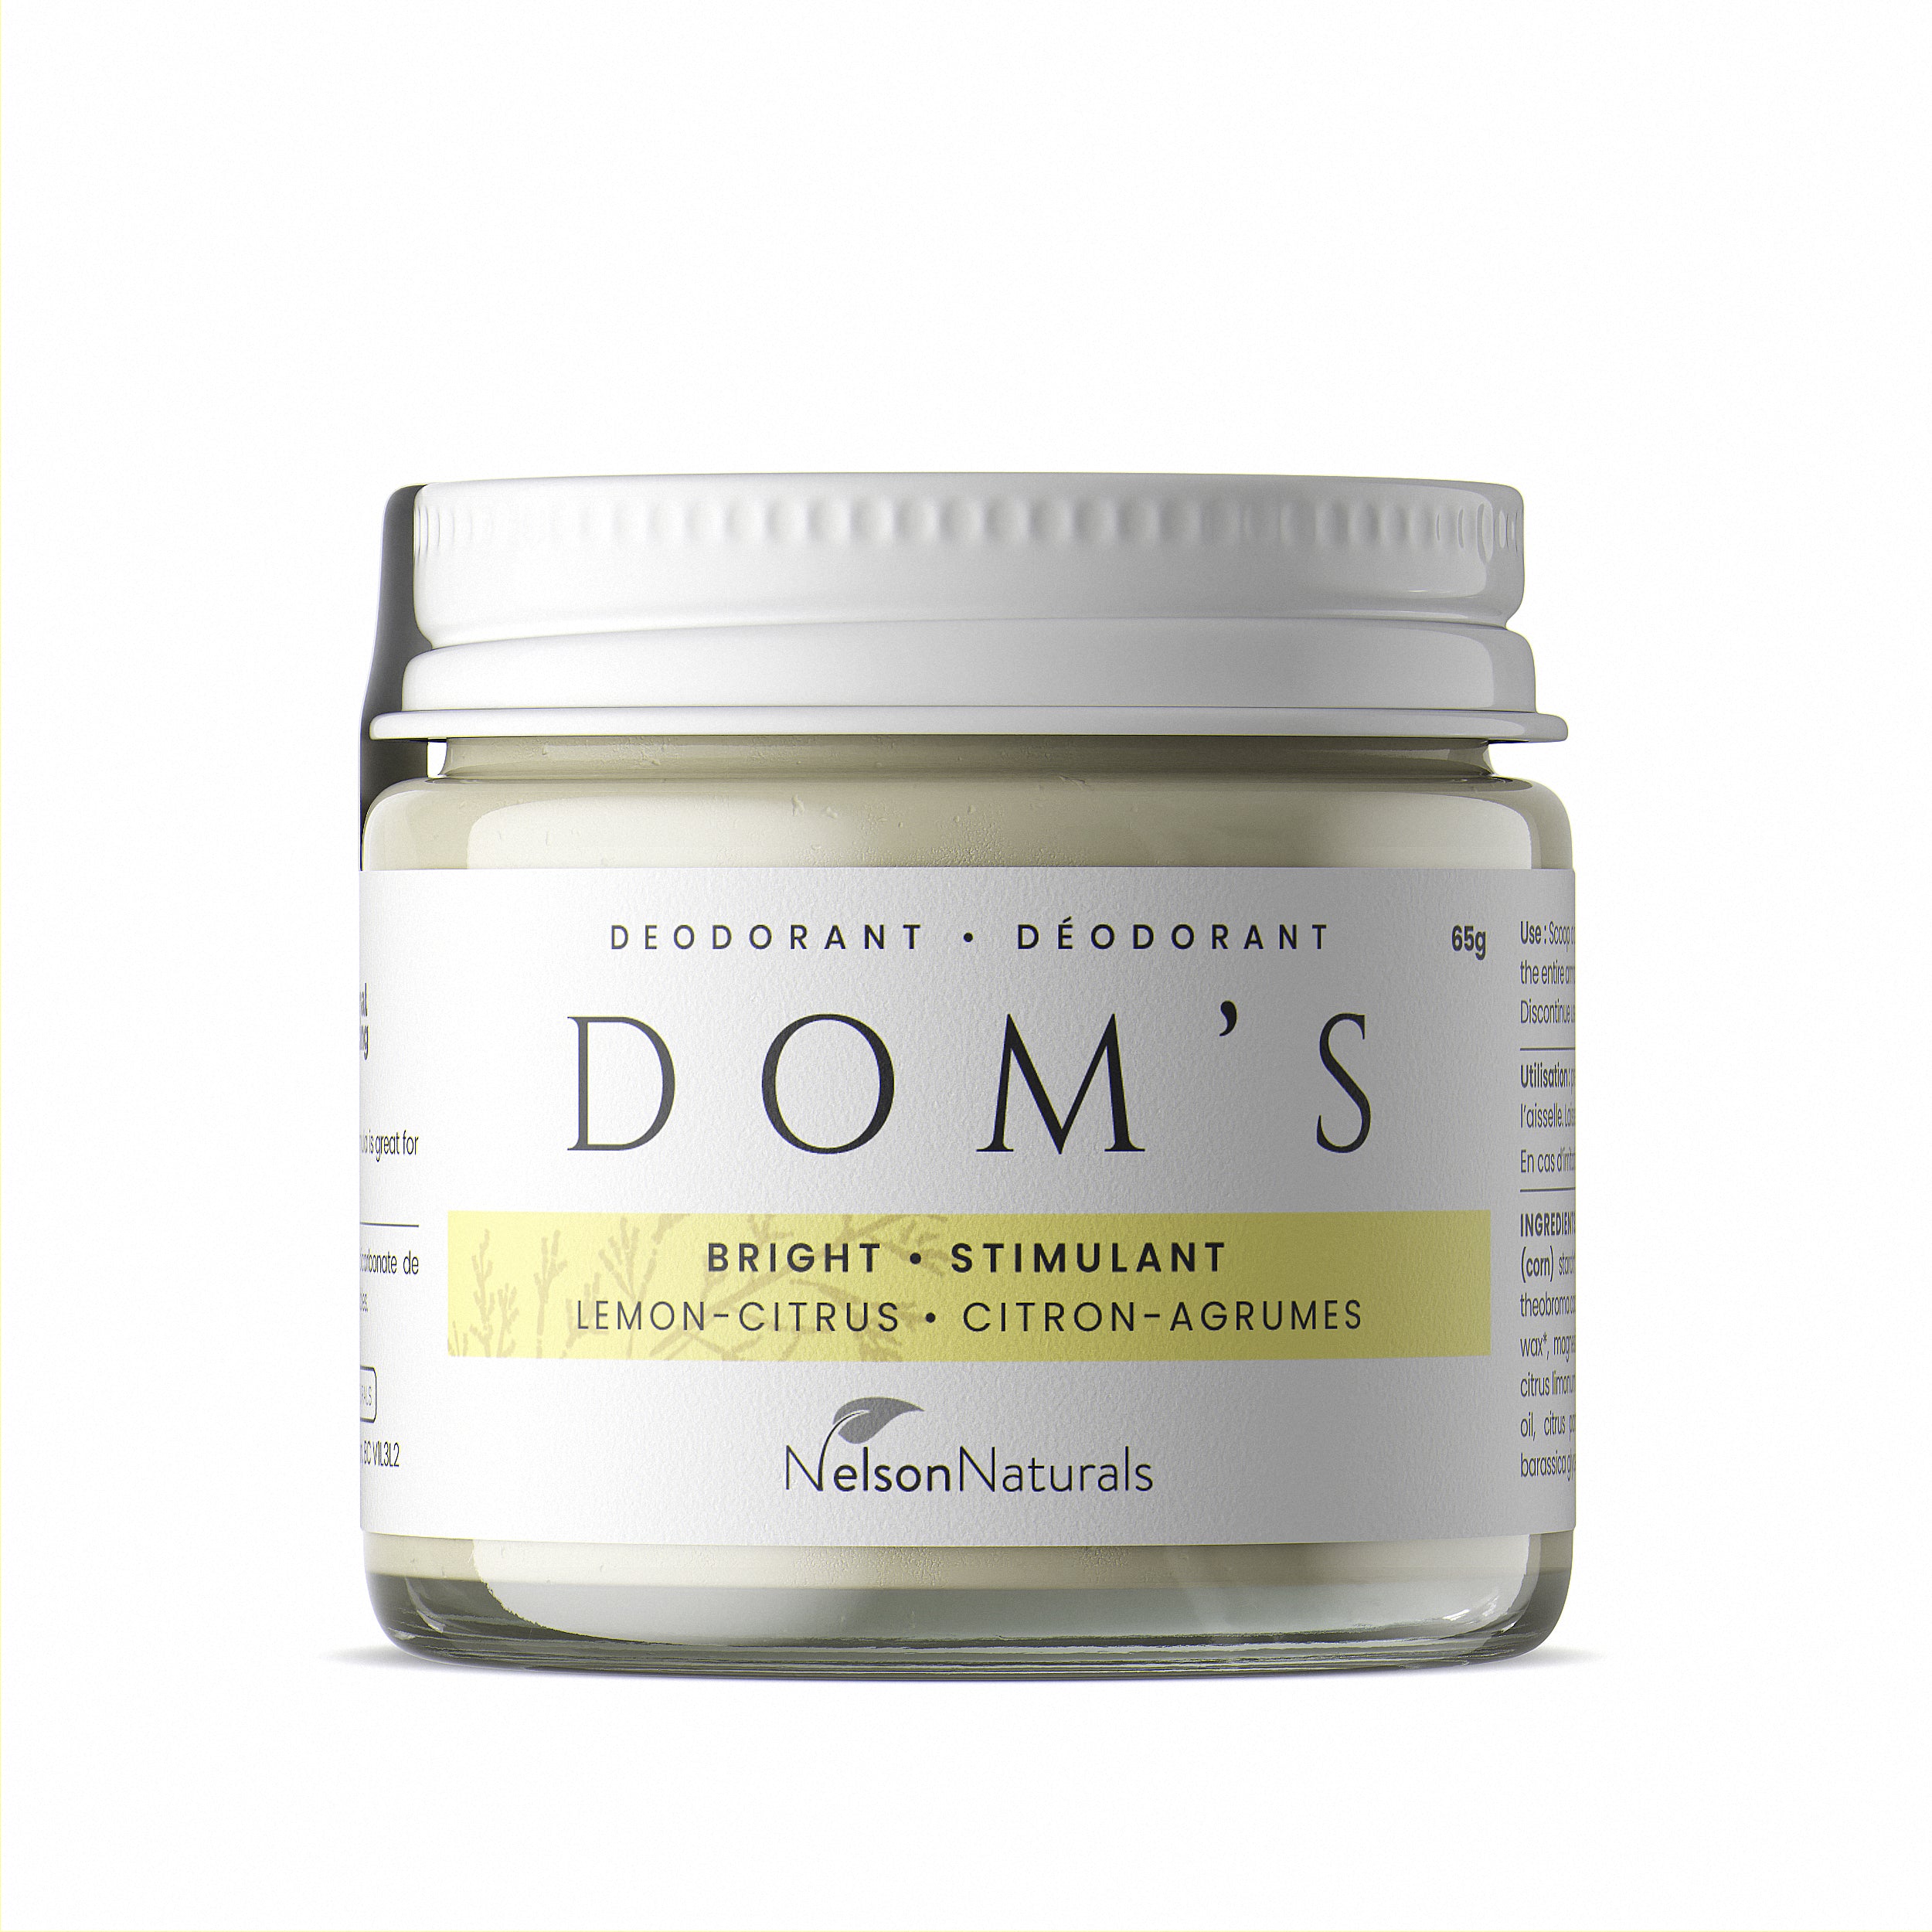 Dom's Deodorant - Bright 65g Deodorant - nelsonnaturals remineralizing toothpaste